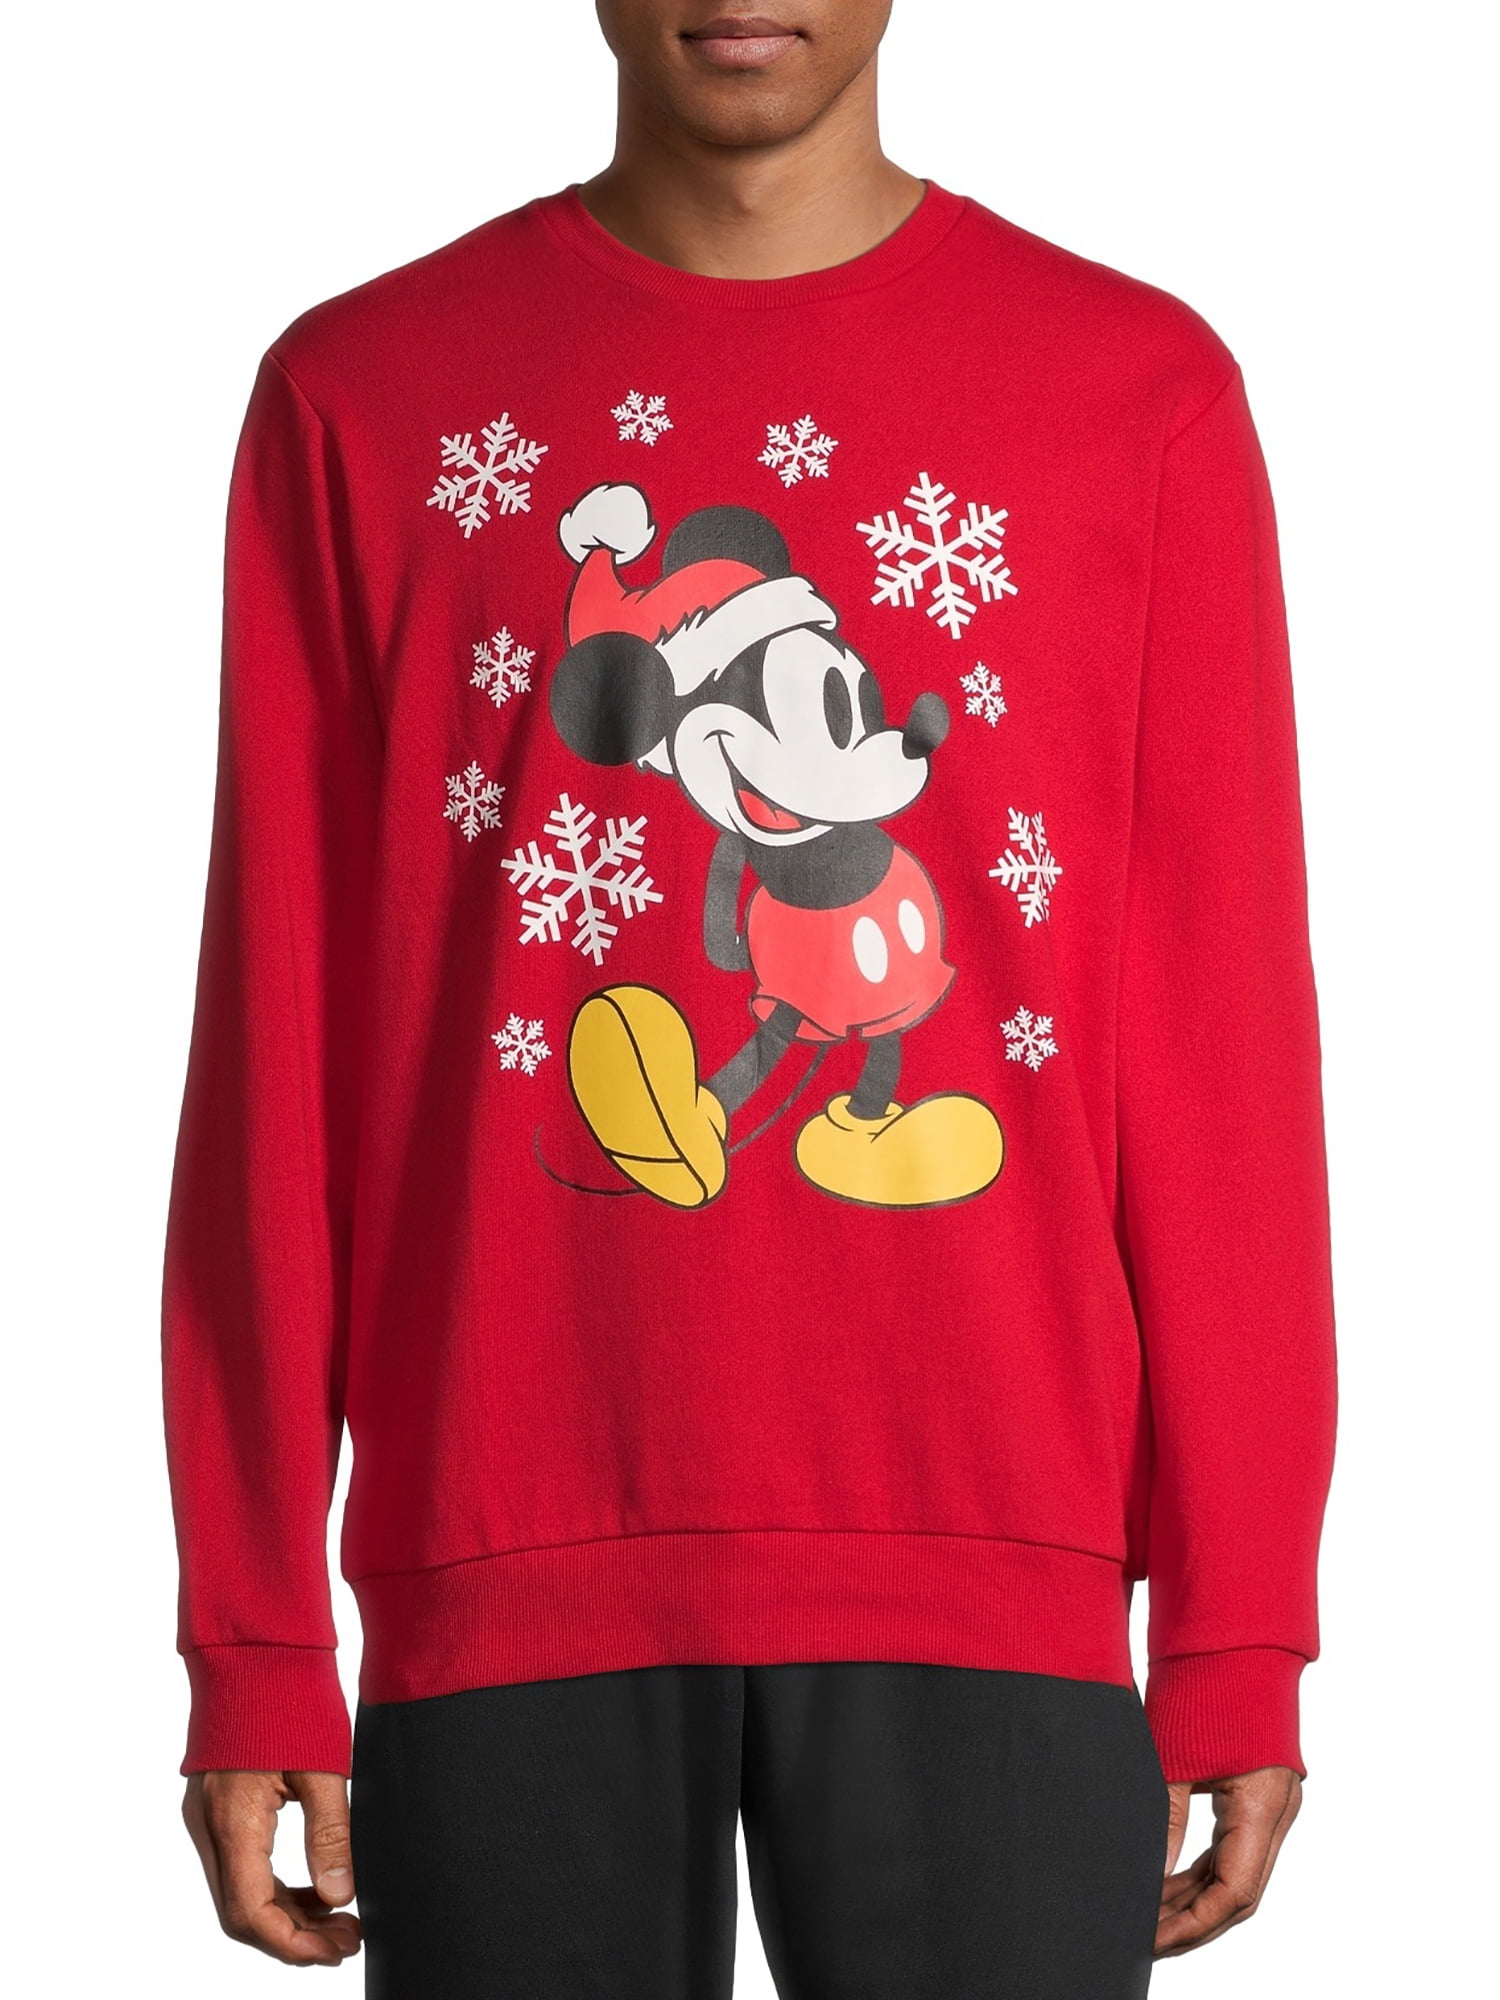 Vintage Mickey Mouse Hoodies Sweatshirt Big Logo Funny Cartoon Street Wear Pull Over Sweater Size M